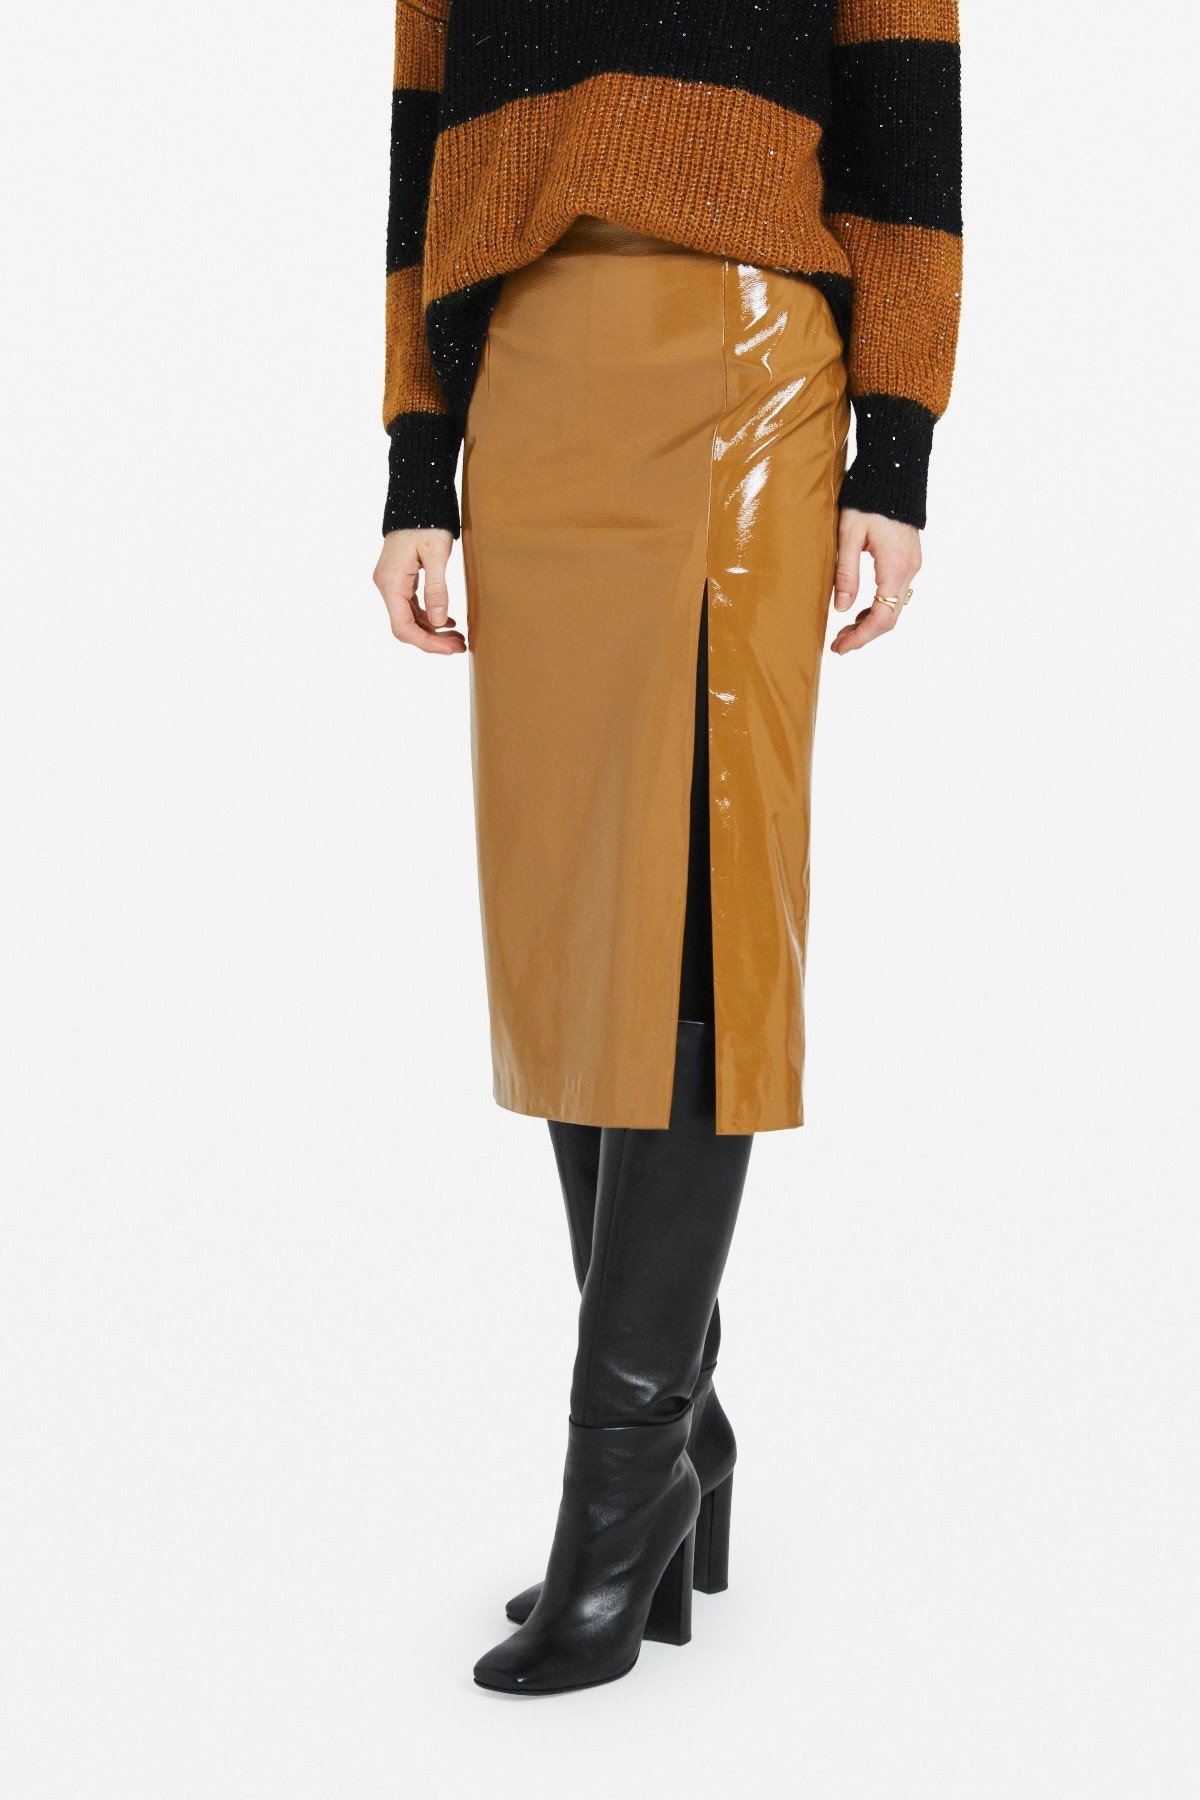 Patent leather midi skirt